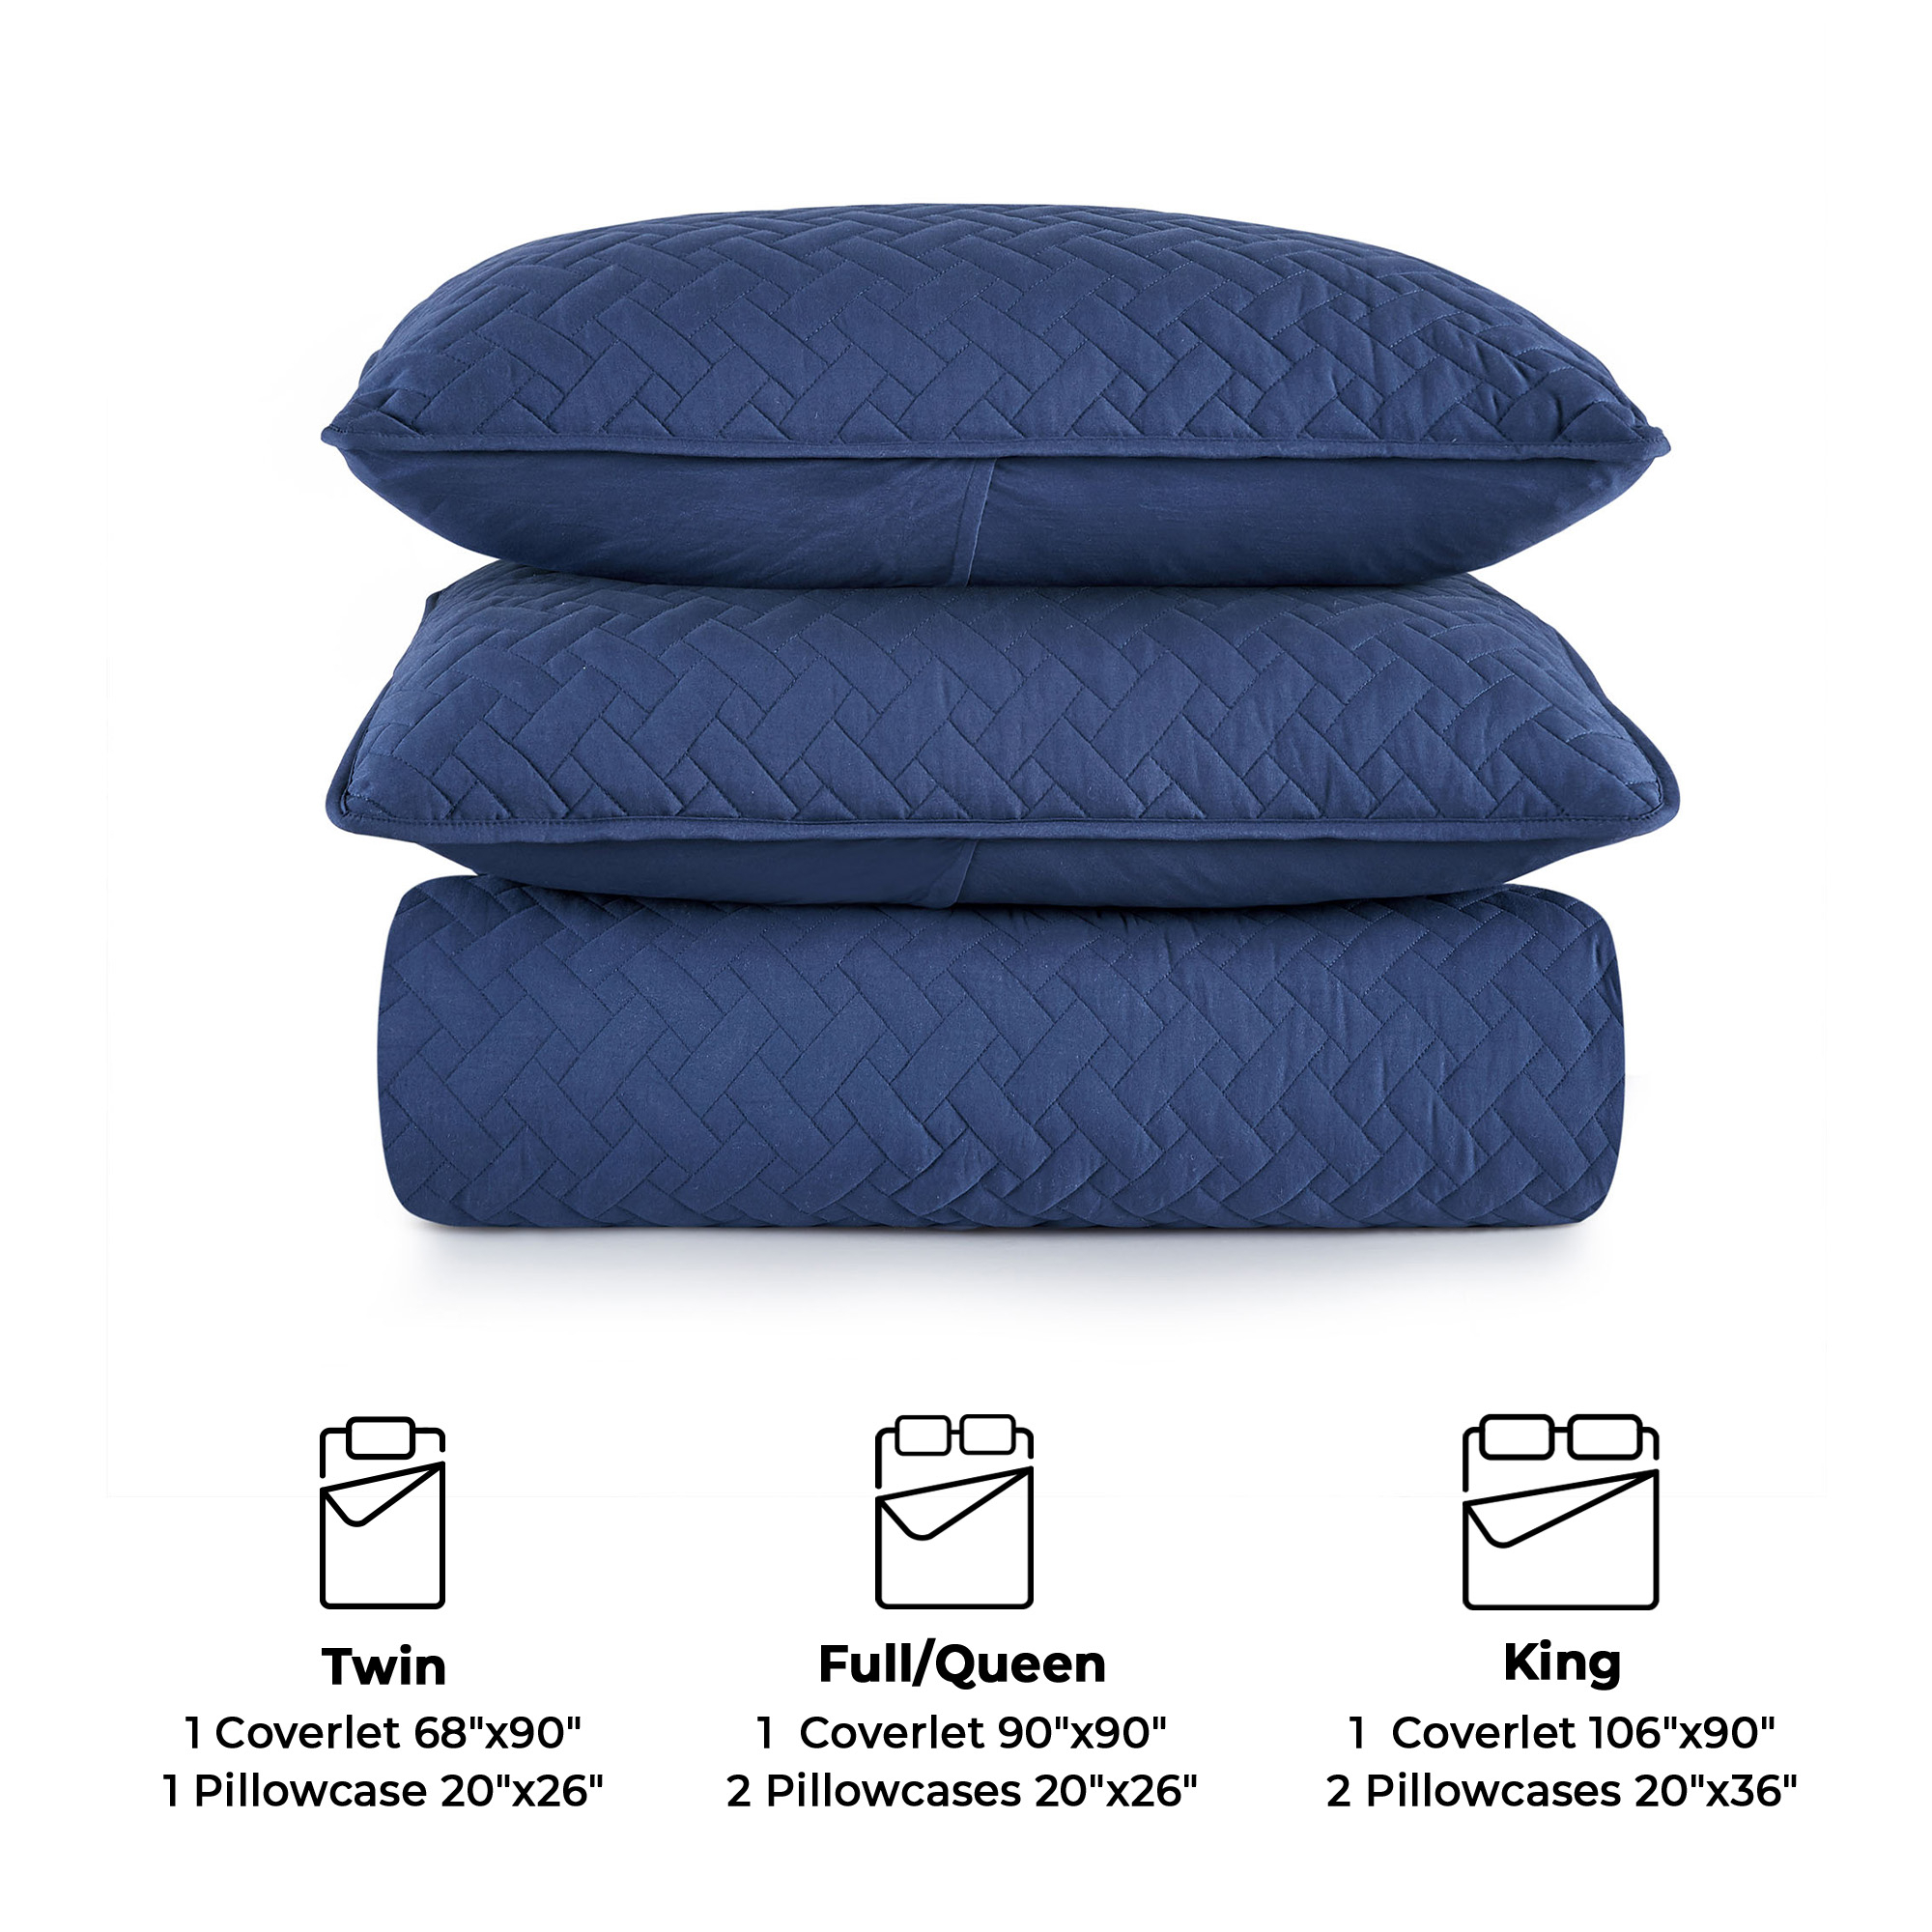 Quilt Set Soft Bed Summer Quilt Lightweight Microfiber Bedspread- Modern Style Coverlet For All Season - Full/Queen Size